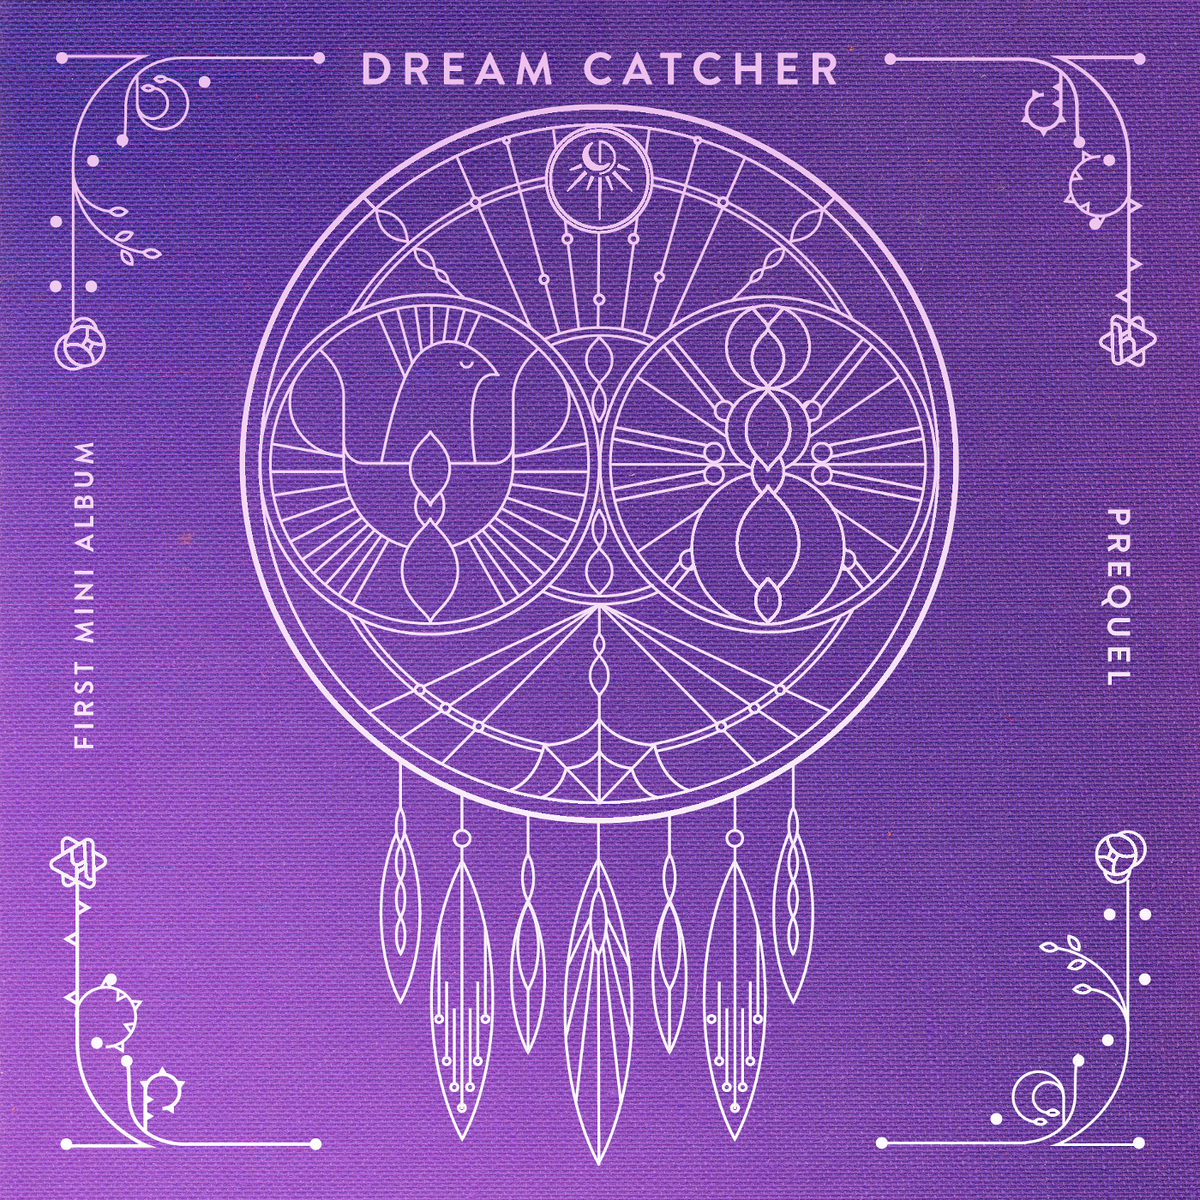 Prequel (Dreamcatcher) | Kpop Wiki | Fandom